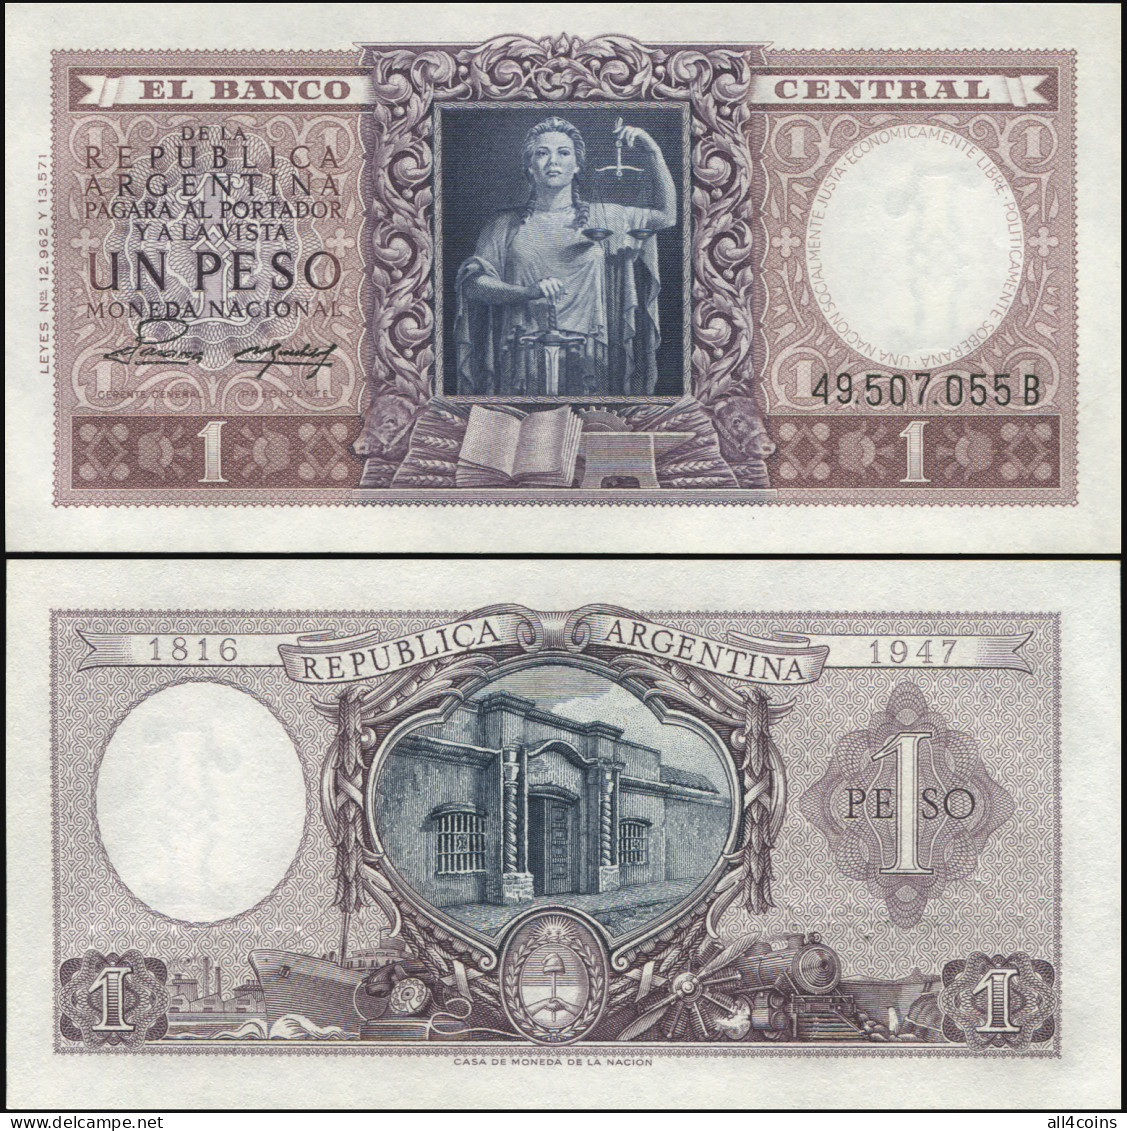 Argentina 1 Peso. ND (1952) Unc. Banknote Cat# P.260b [Serie A] - Argentina